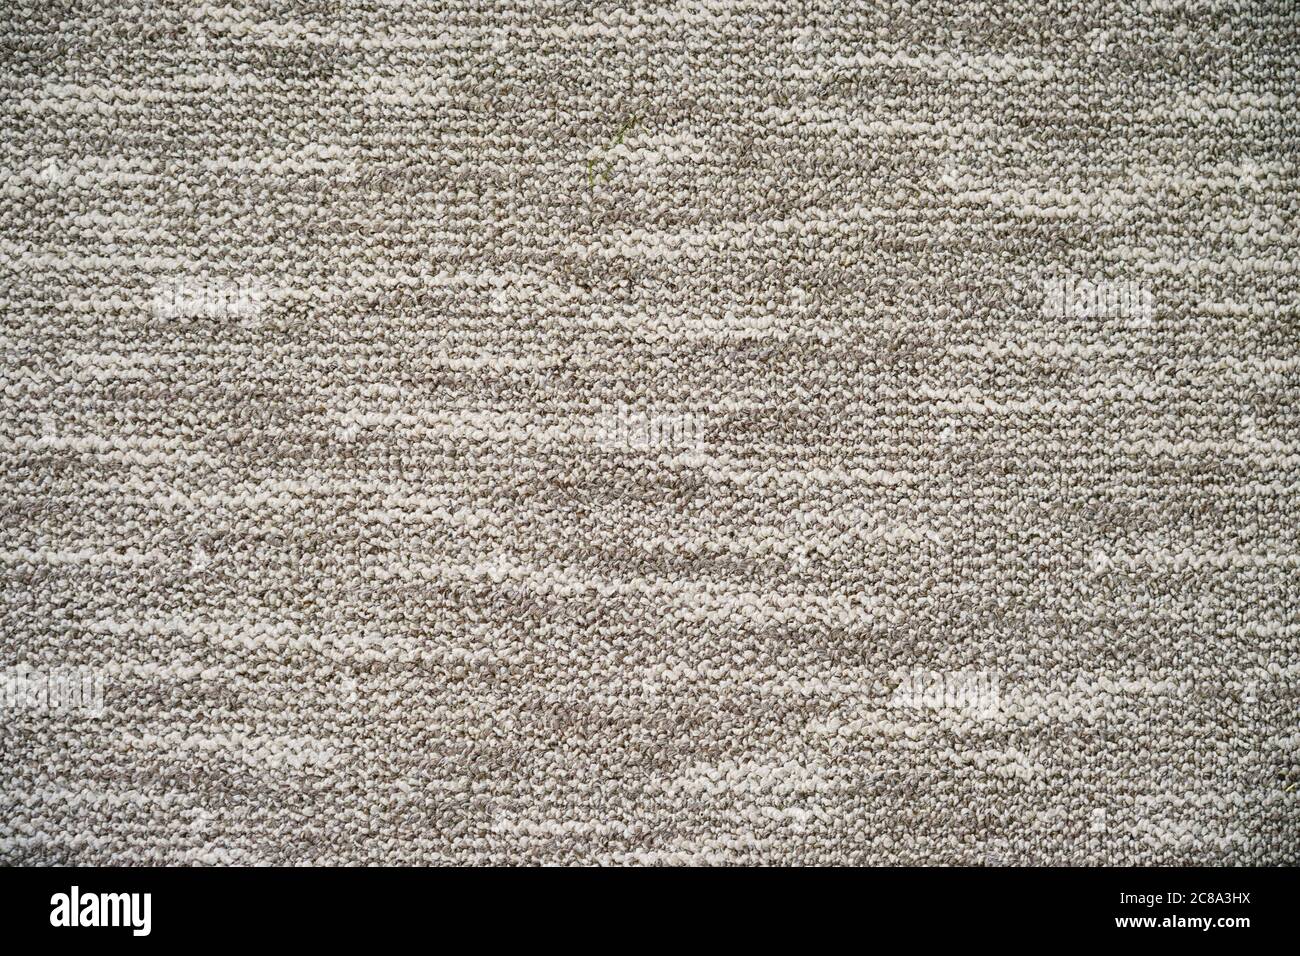 carpet texture coloring brown melange Stock Photo